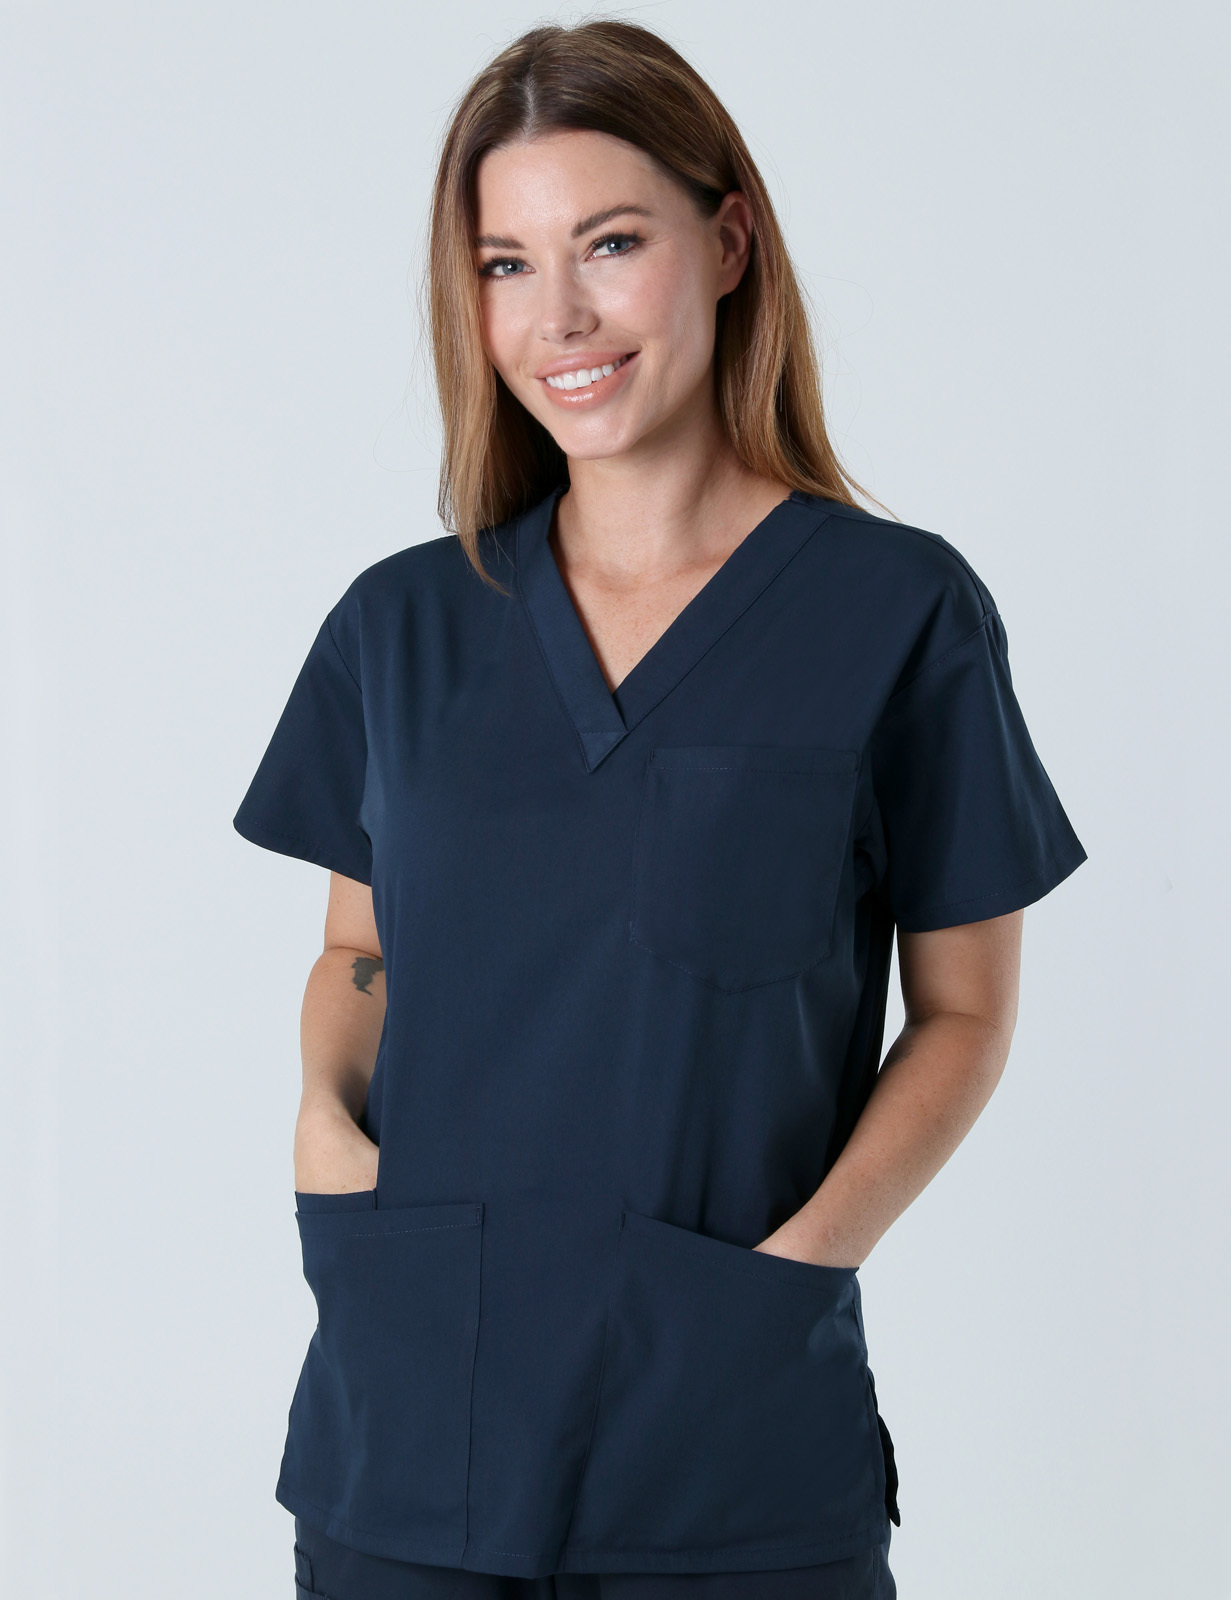 Rockhampton Hospital Emergency Department Registered Nurse Uniform Set Bundle (4 Pocket Top and Cargo Pants in Navy + 3 Logos)